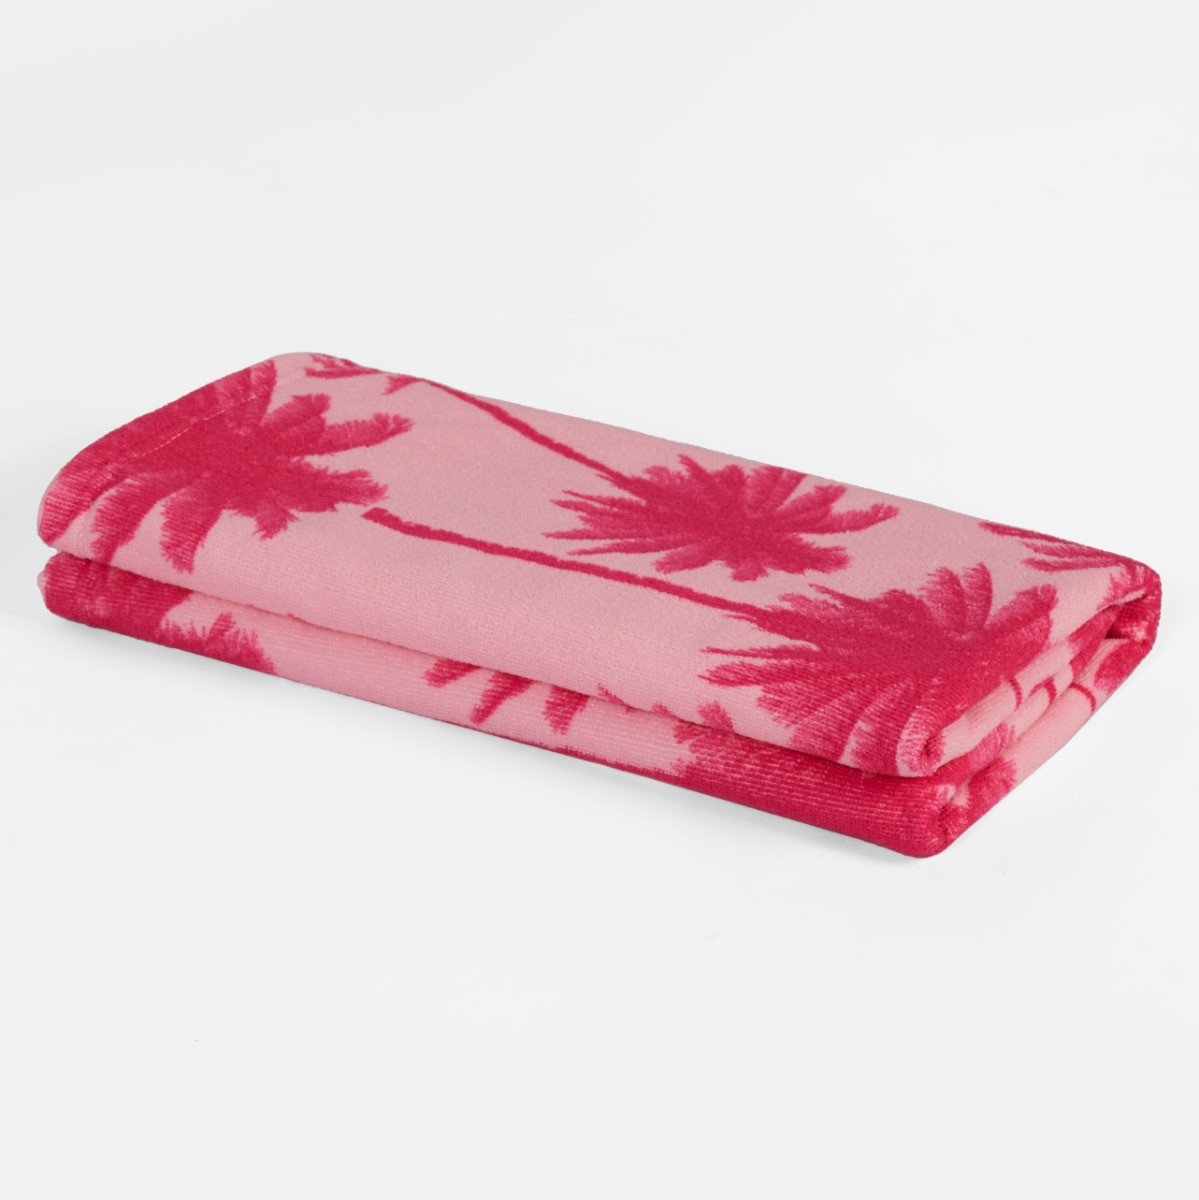 Dreamscene Palm Print Beach Towel - Blush>